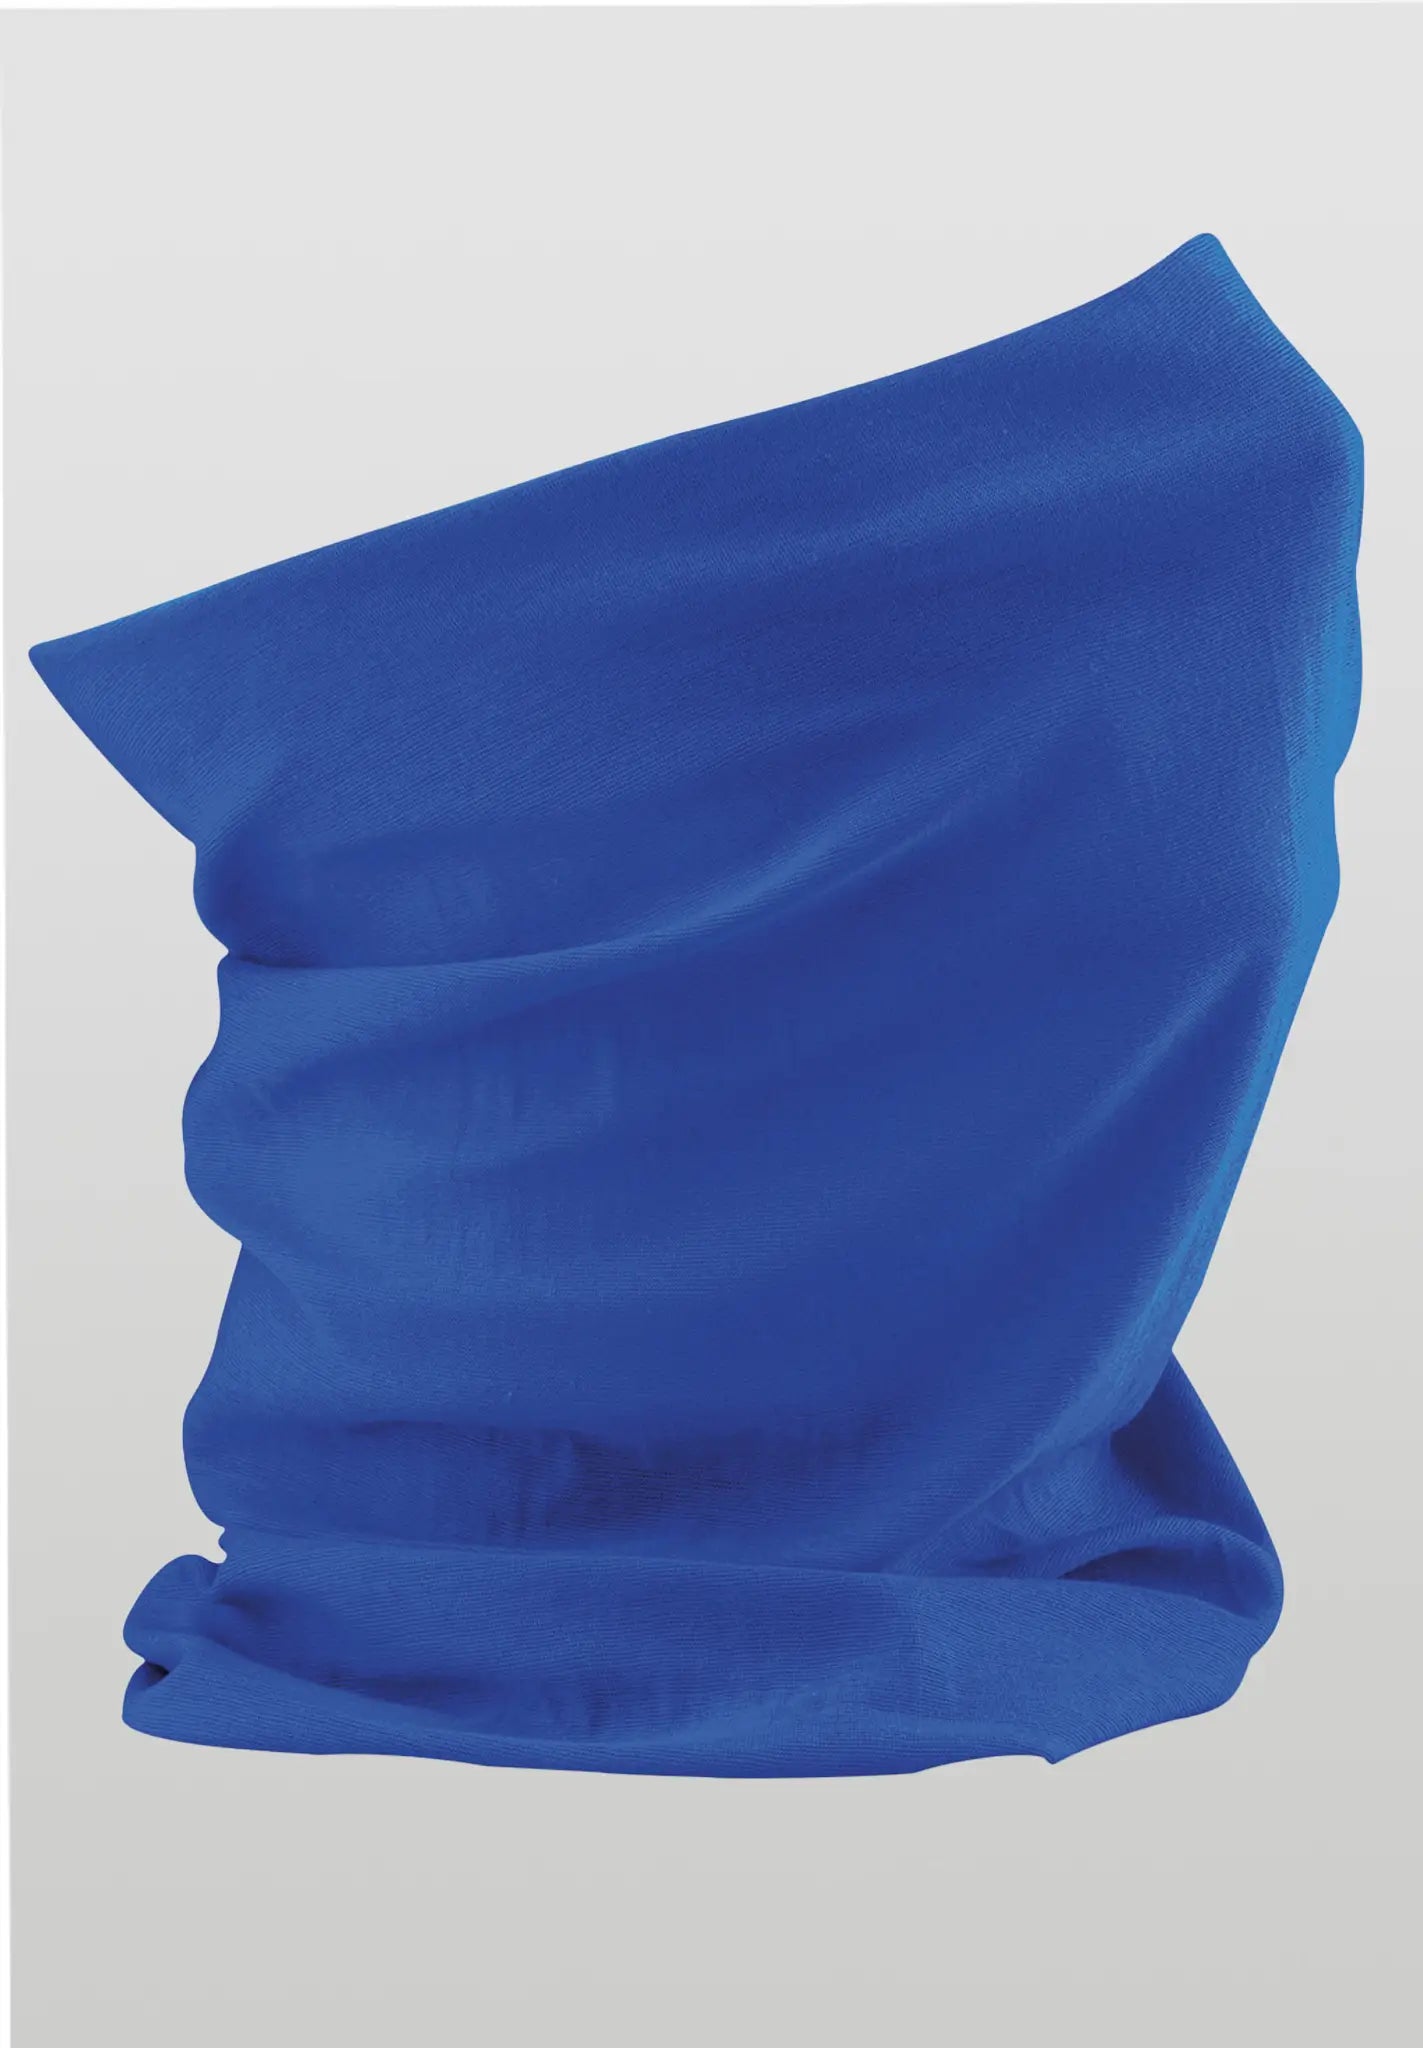 Bright Blue multi use headwear, running headband